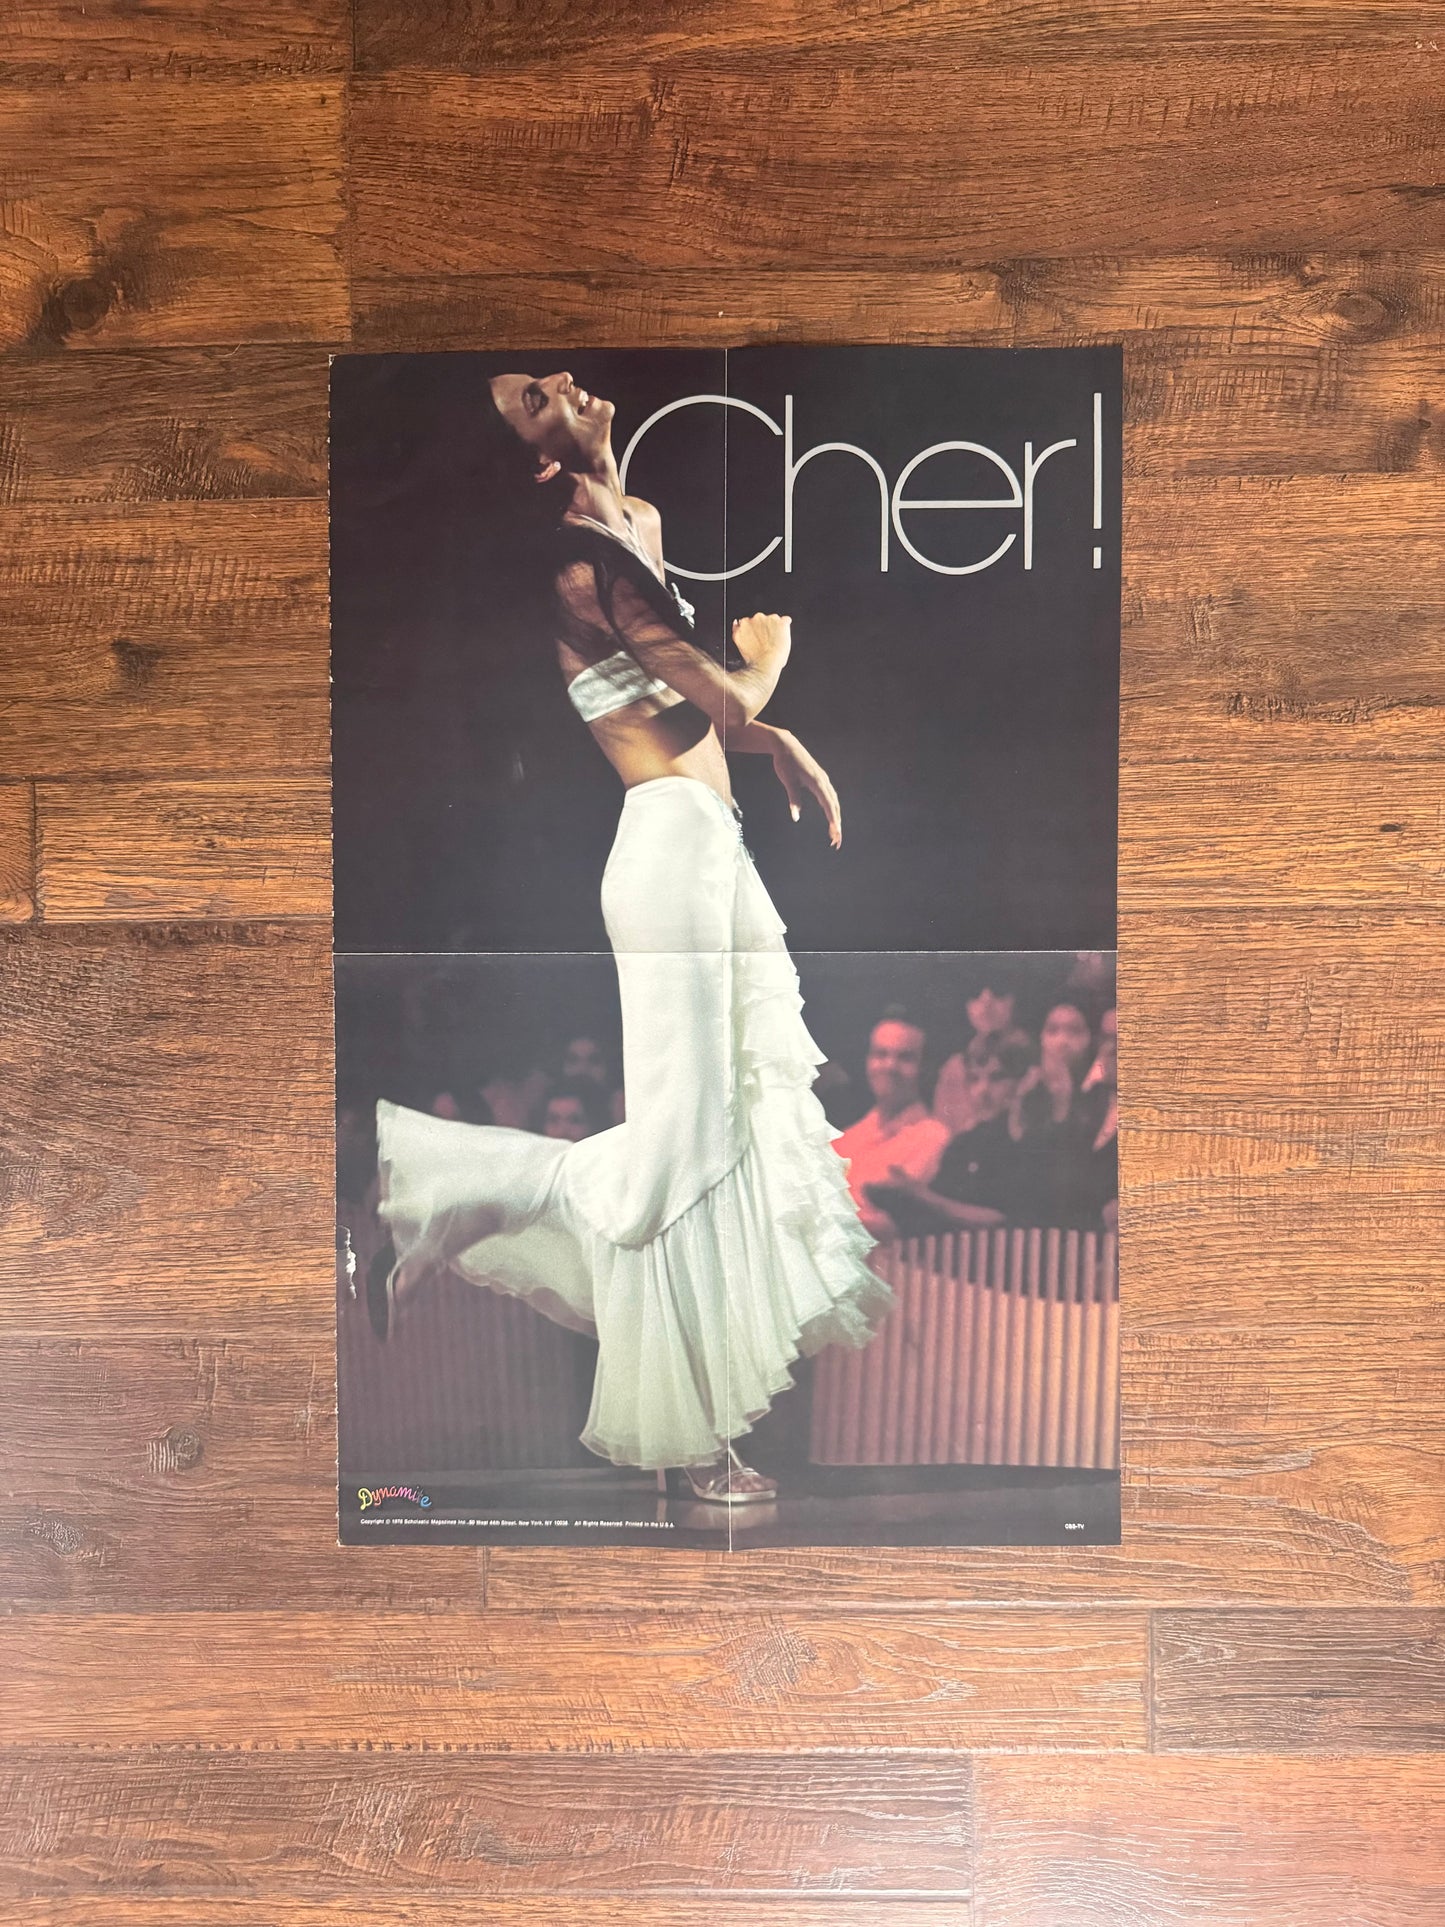 Vintage Dynamite Magazine Insert Poster - 1970s - Cher! Stage Shot